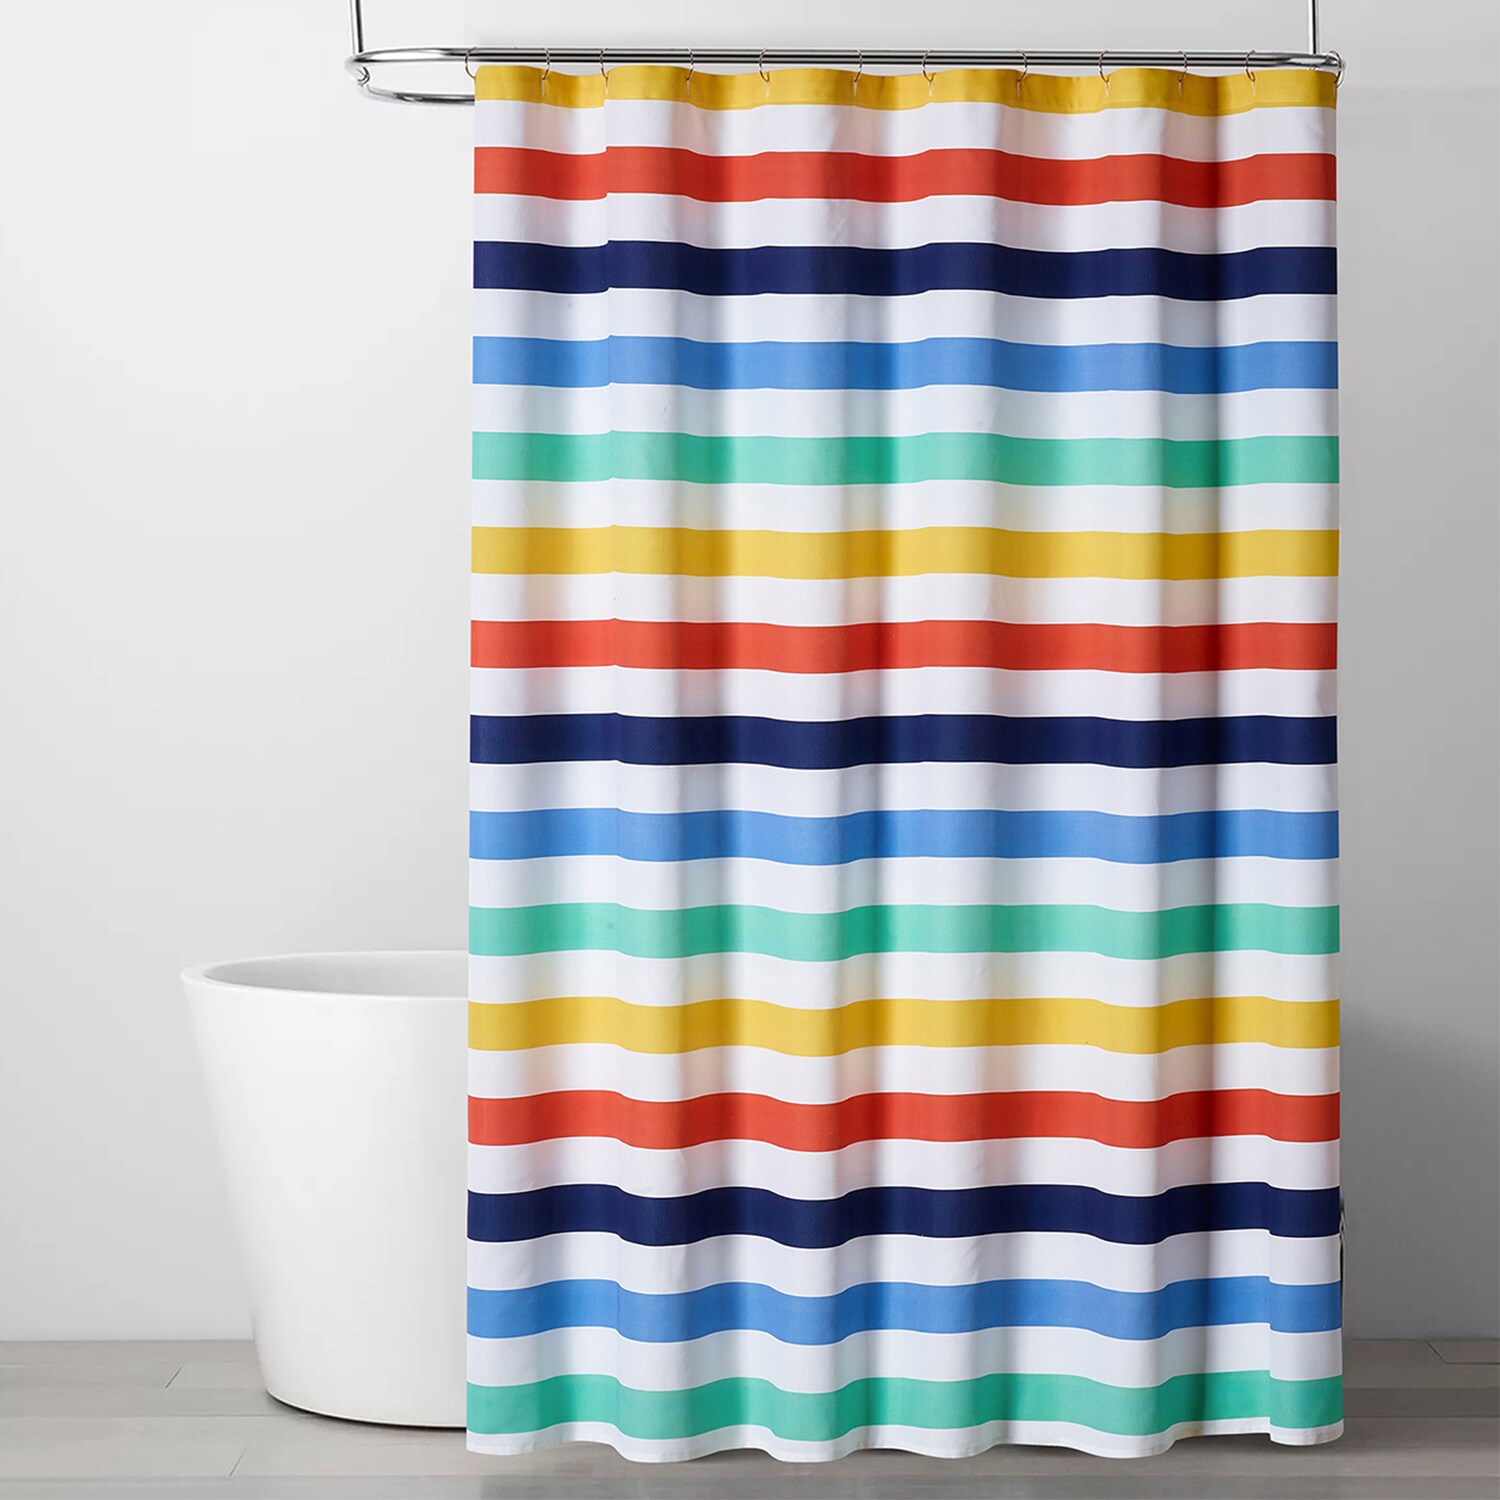 Interdesign T-Bar Shower Curtain Hooks, Set of 12, Satin